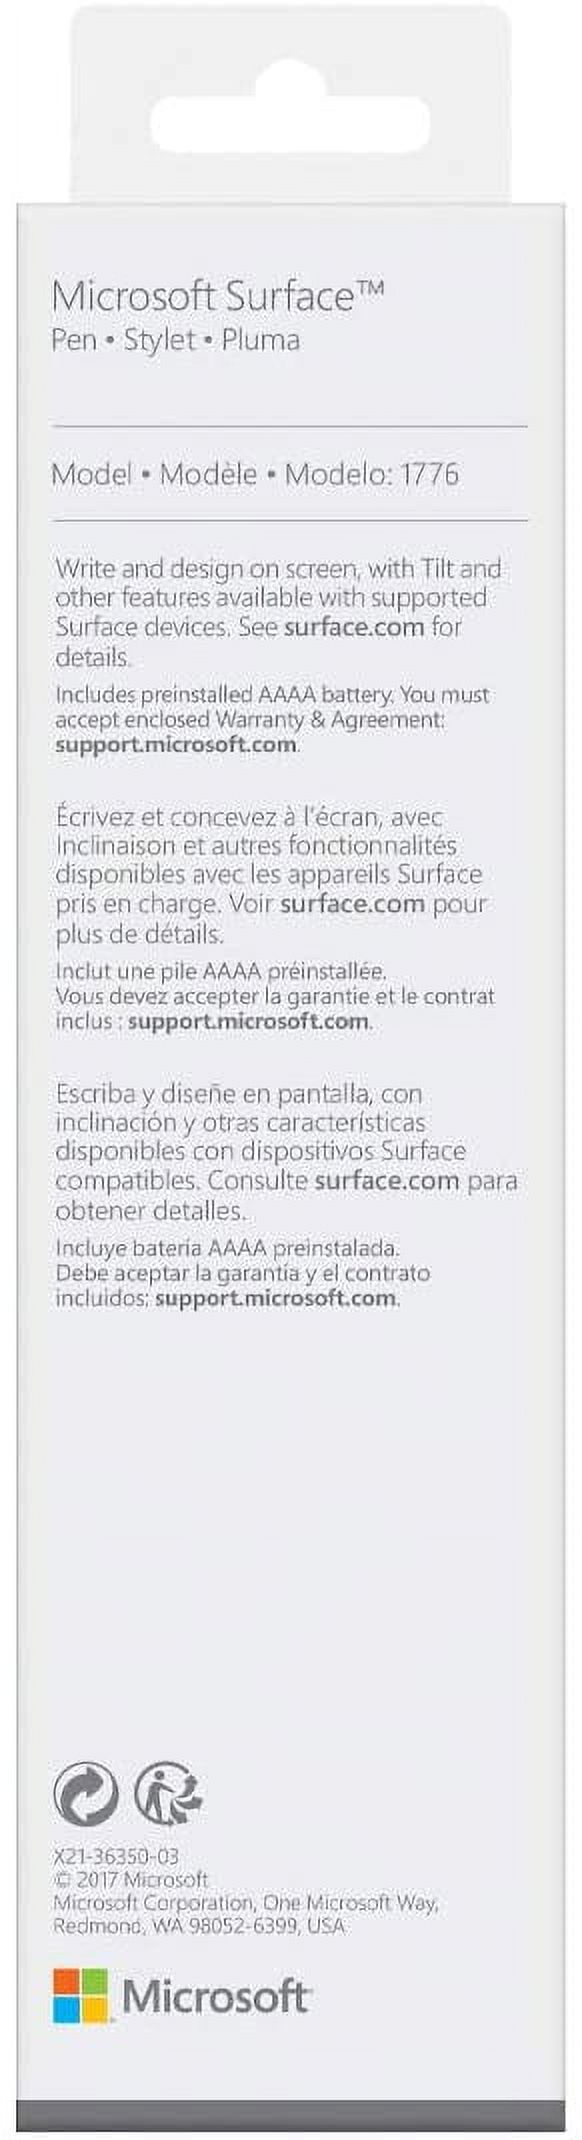 Microsoft Surface Pen, Charcoal, EYU-00001 - image 2 of 4